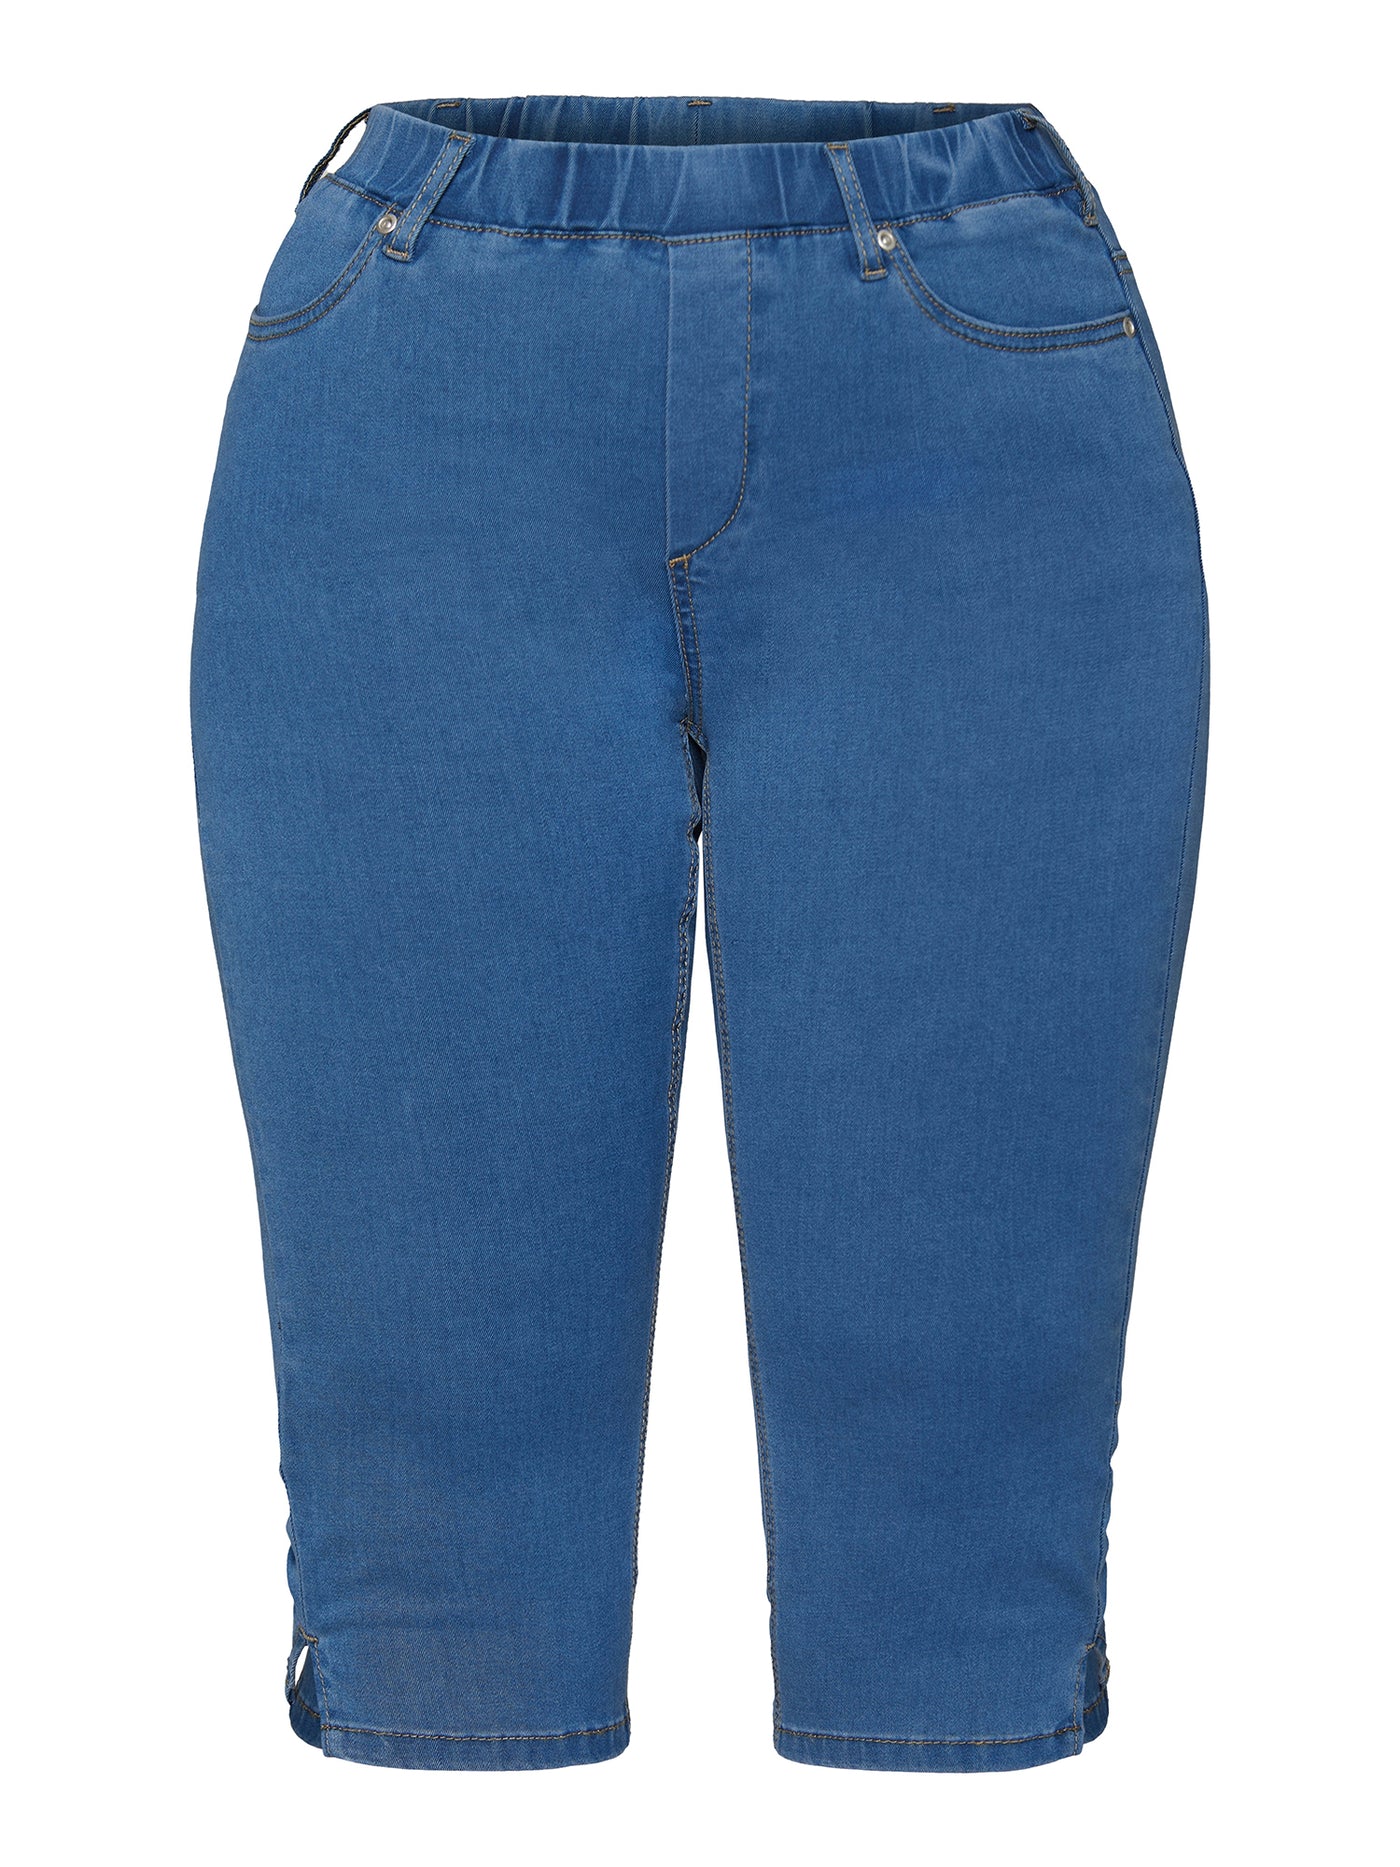 Sofia Capri Jeans - Medium Blå